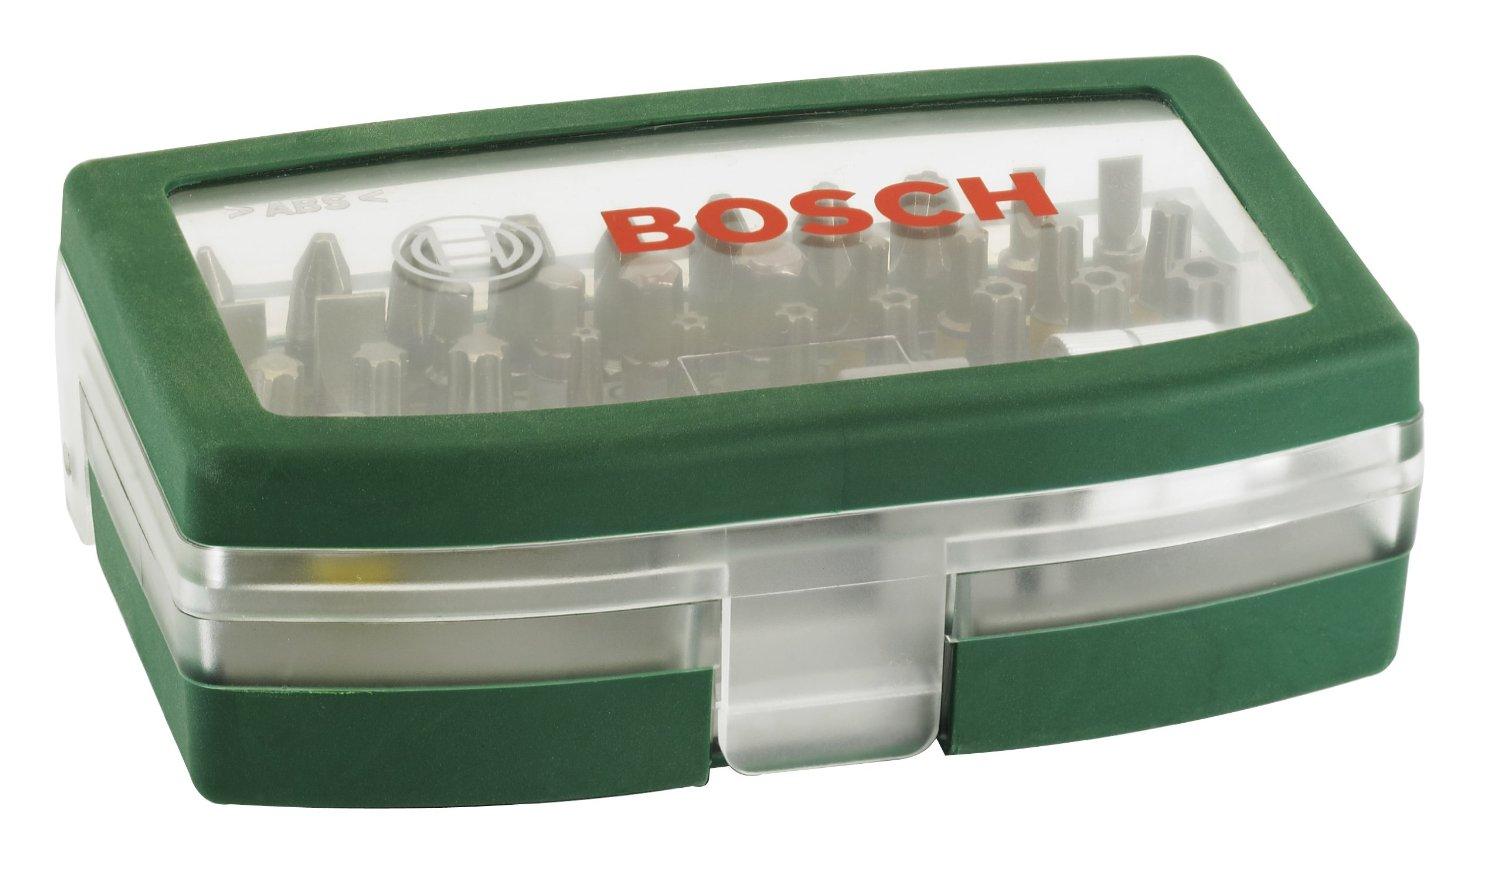 Bosch 32 pcs Screwdriver Bit Set Elektroinstruments